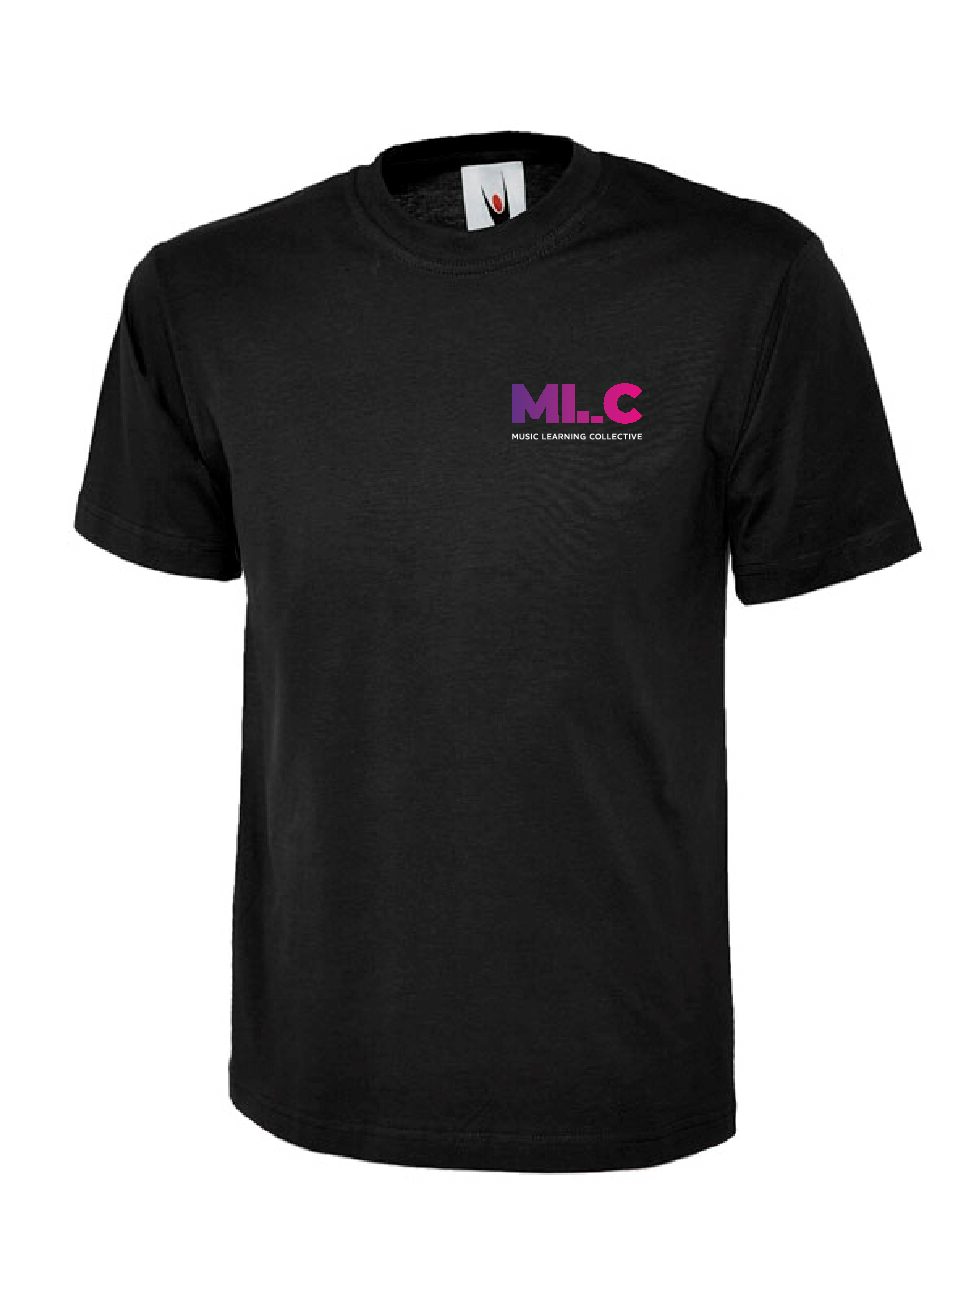 MLC Clothing - Kids T Shirts | Abbey Road Music